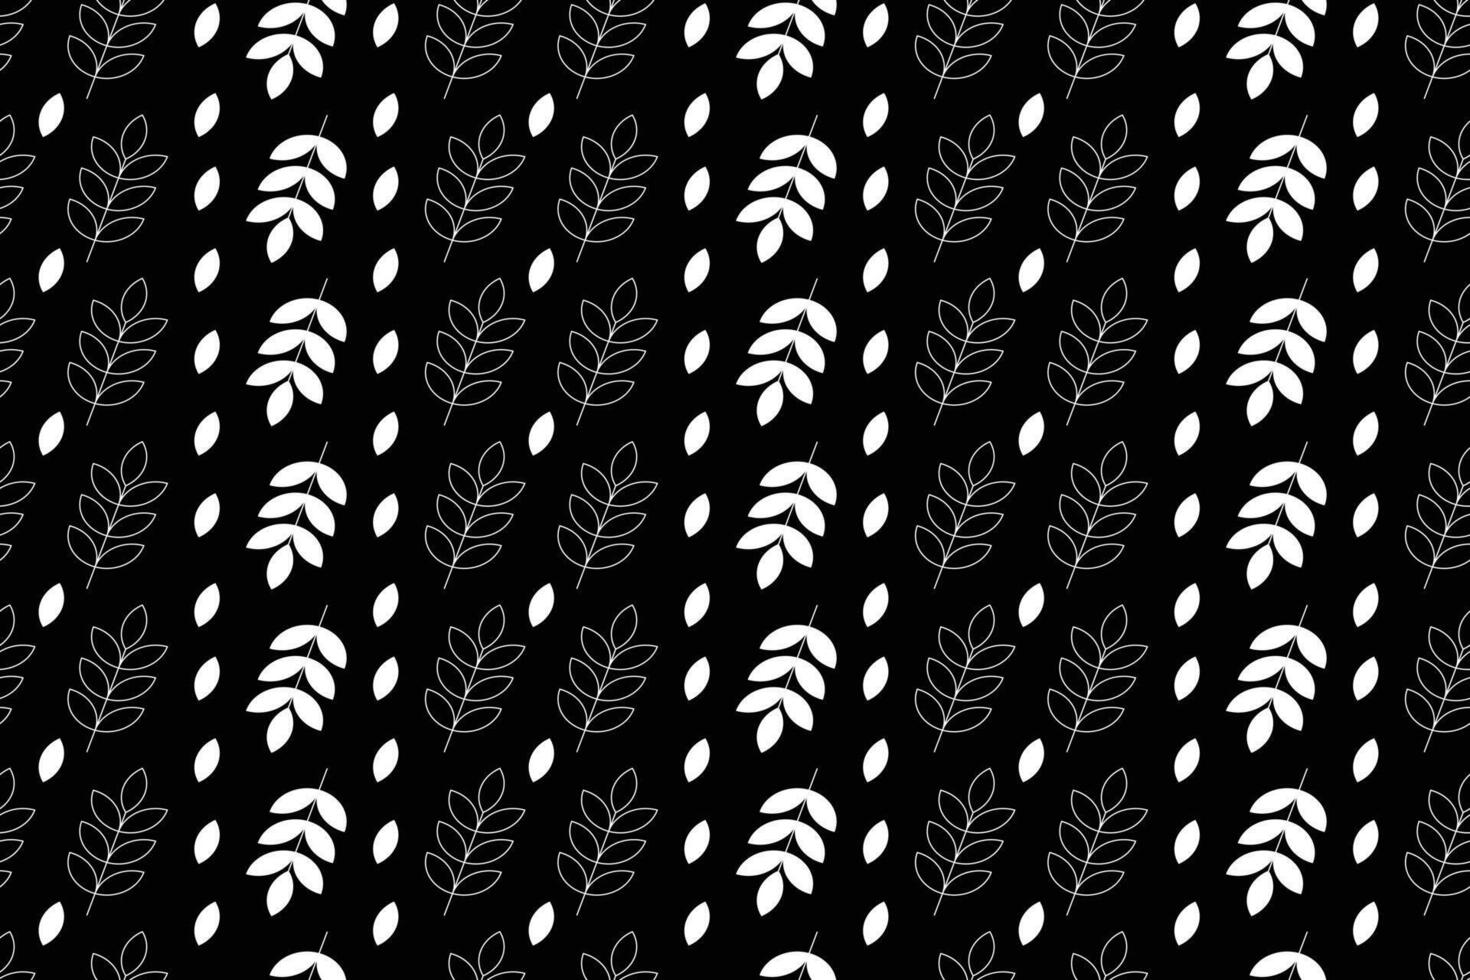 Floral Ivy Background vector